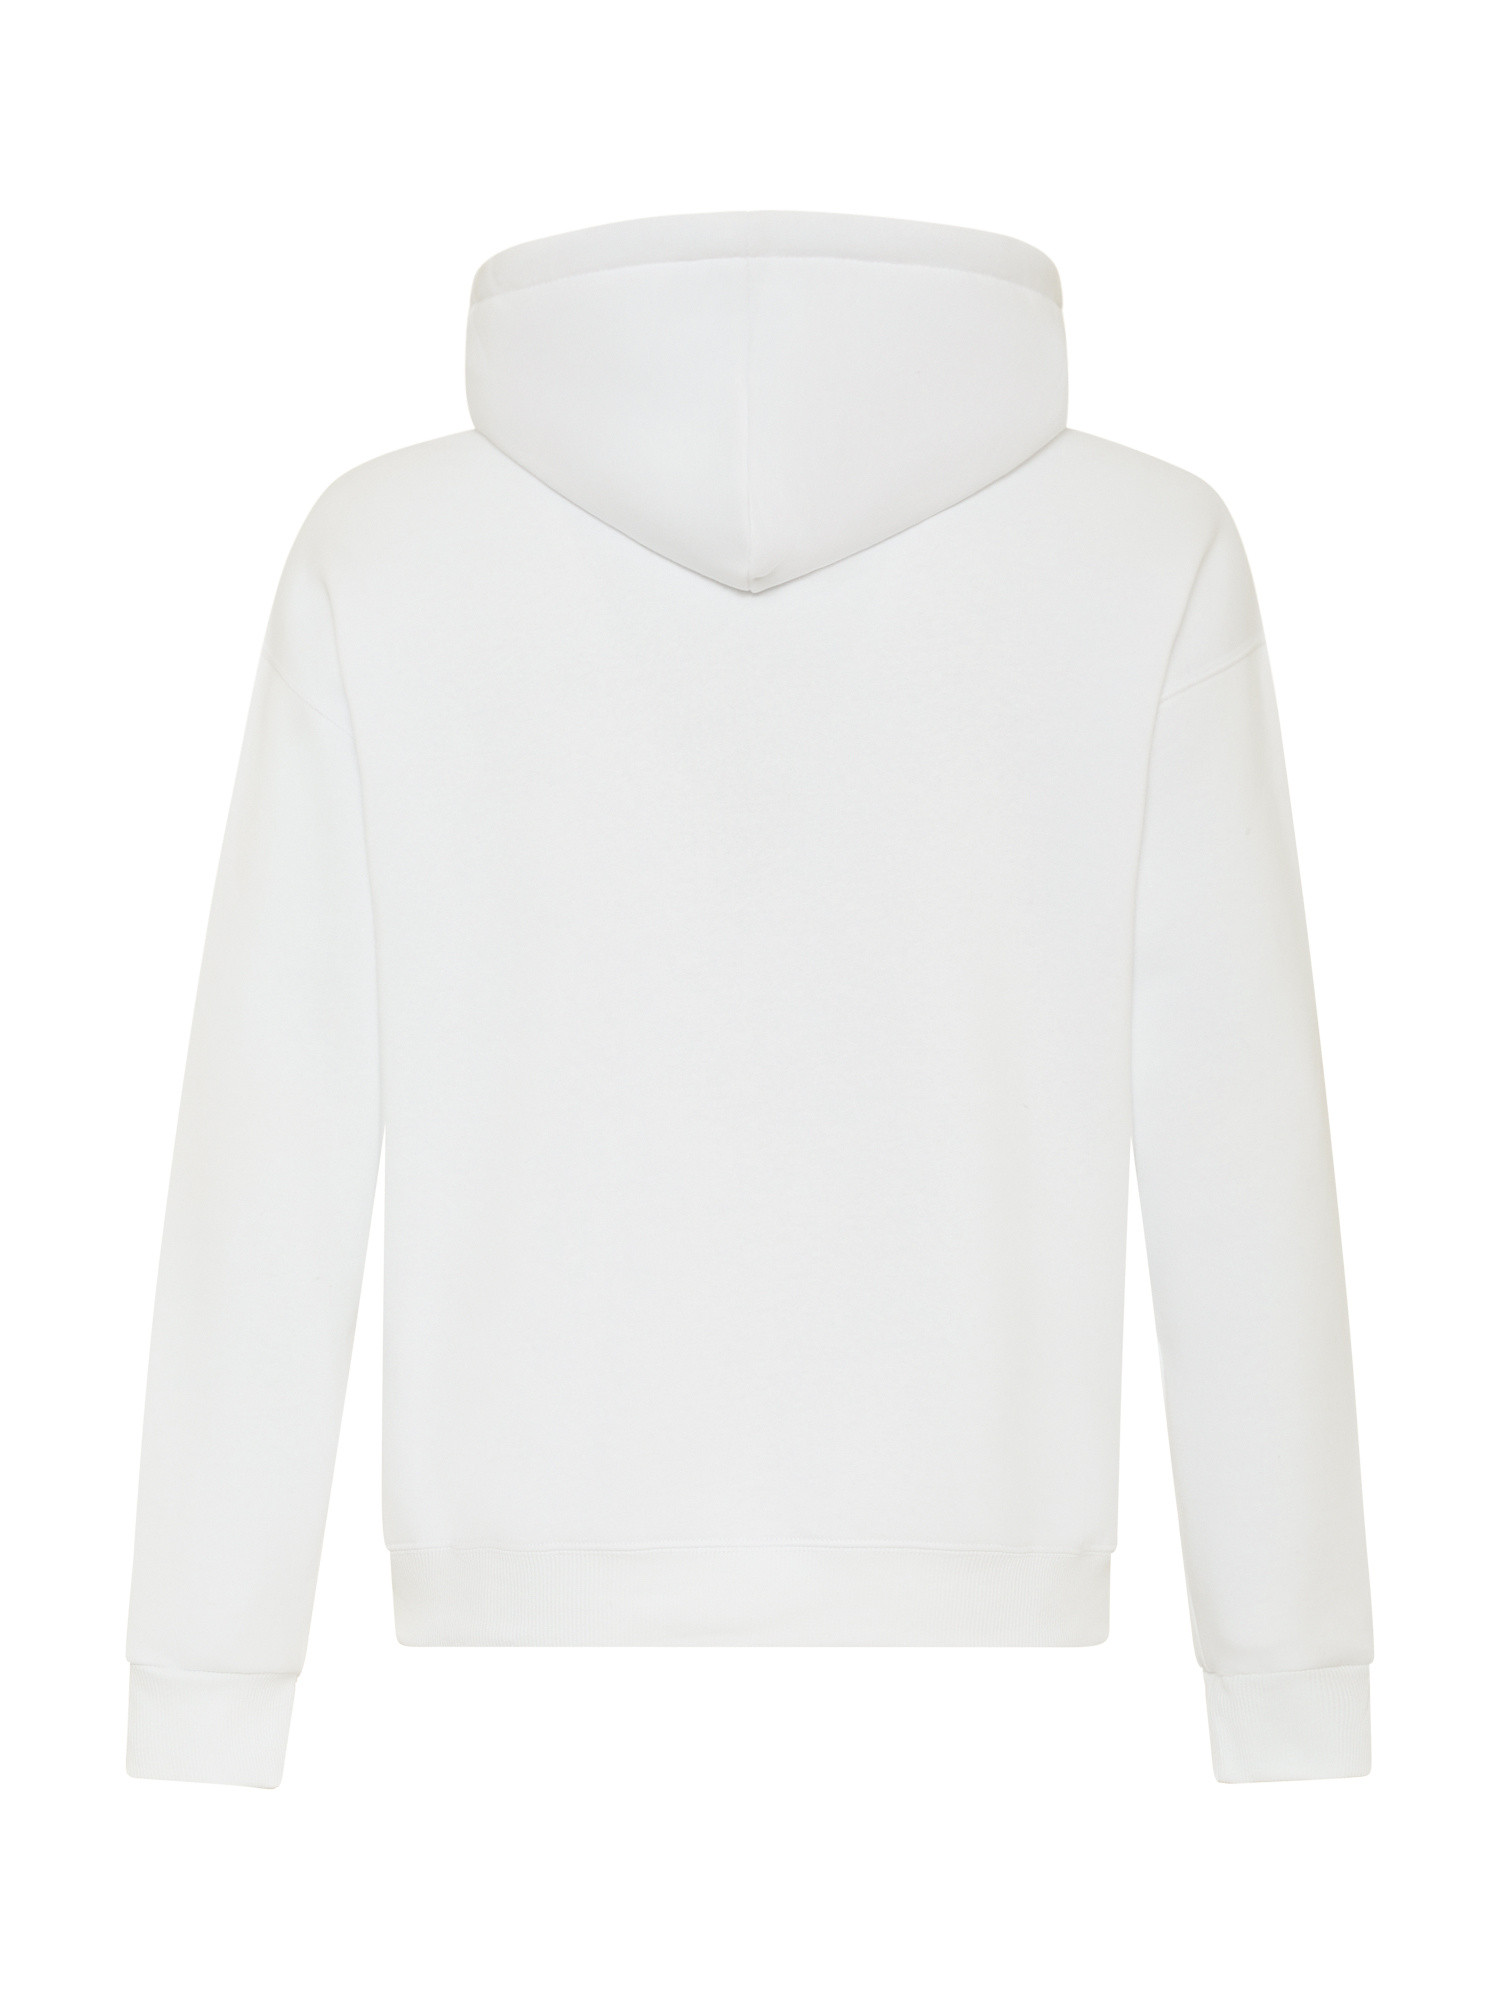 Usual - Barrio Hooded Sweatshirt, White, large image number 1